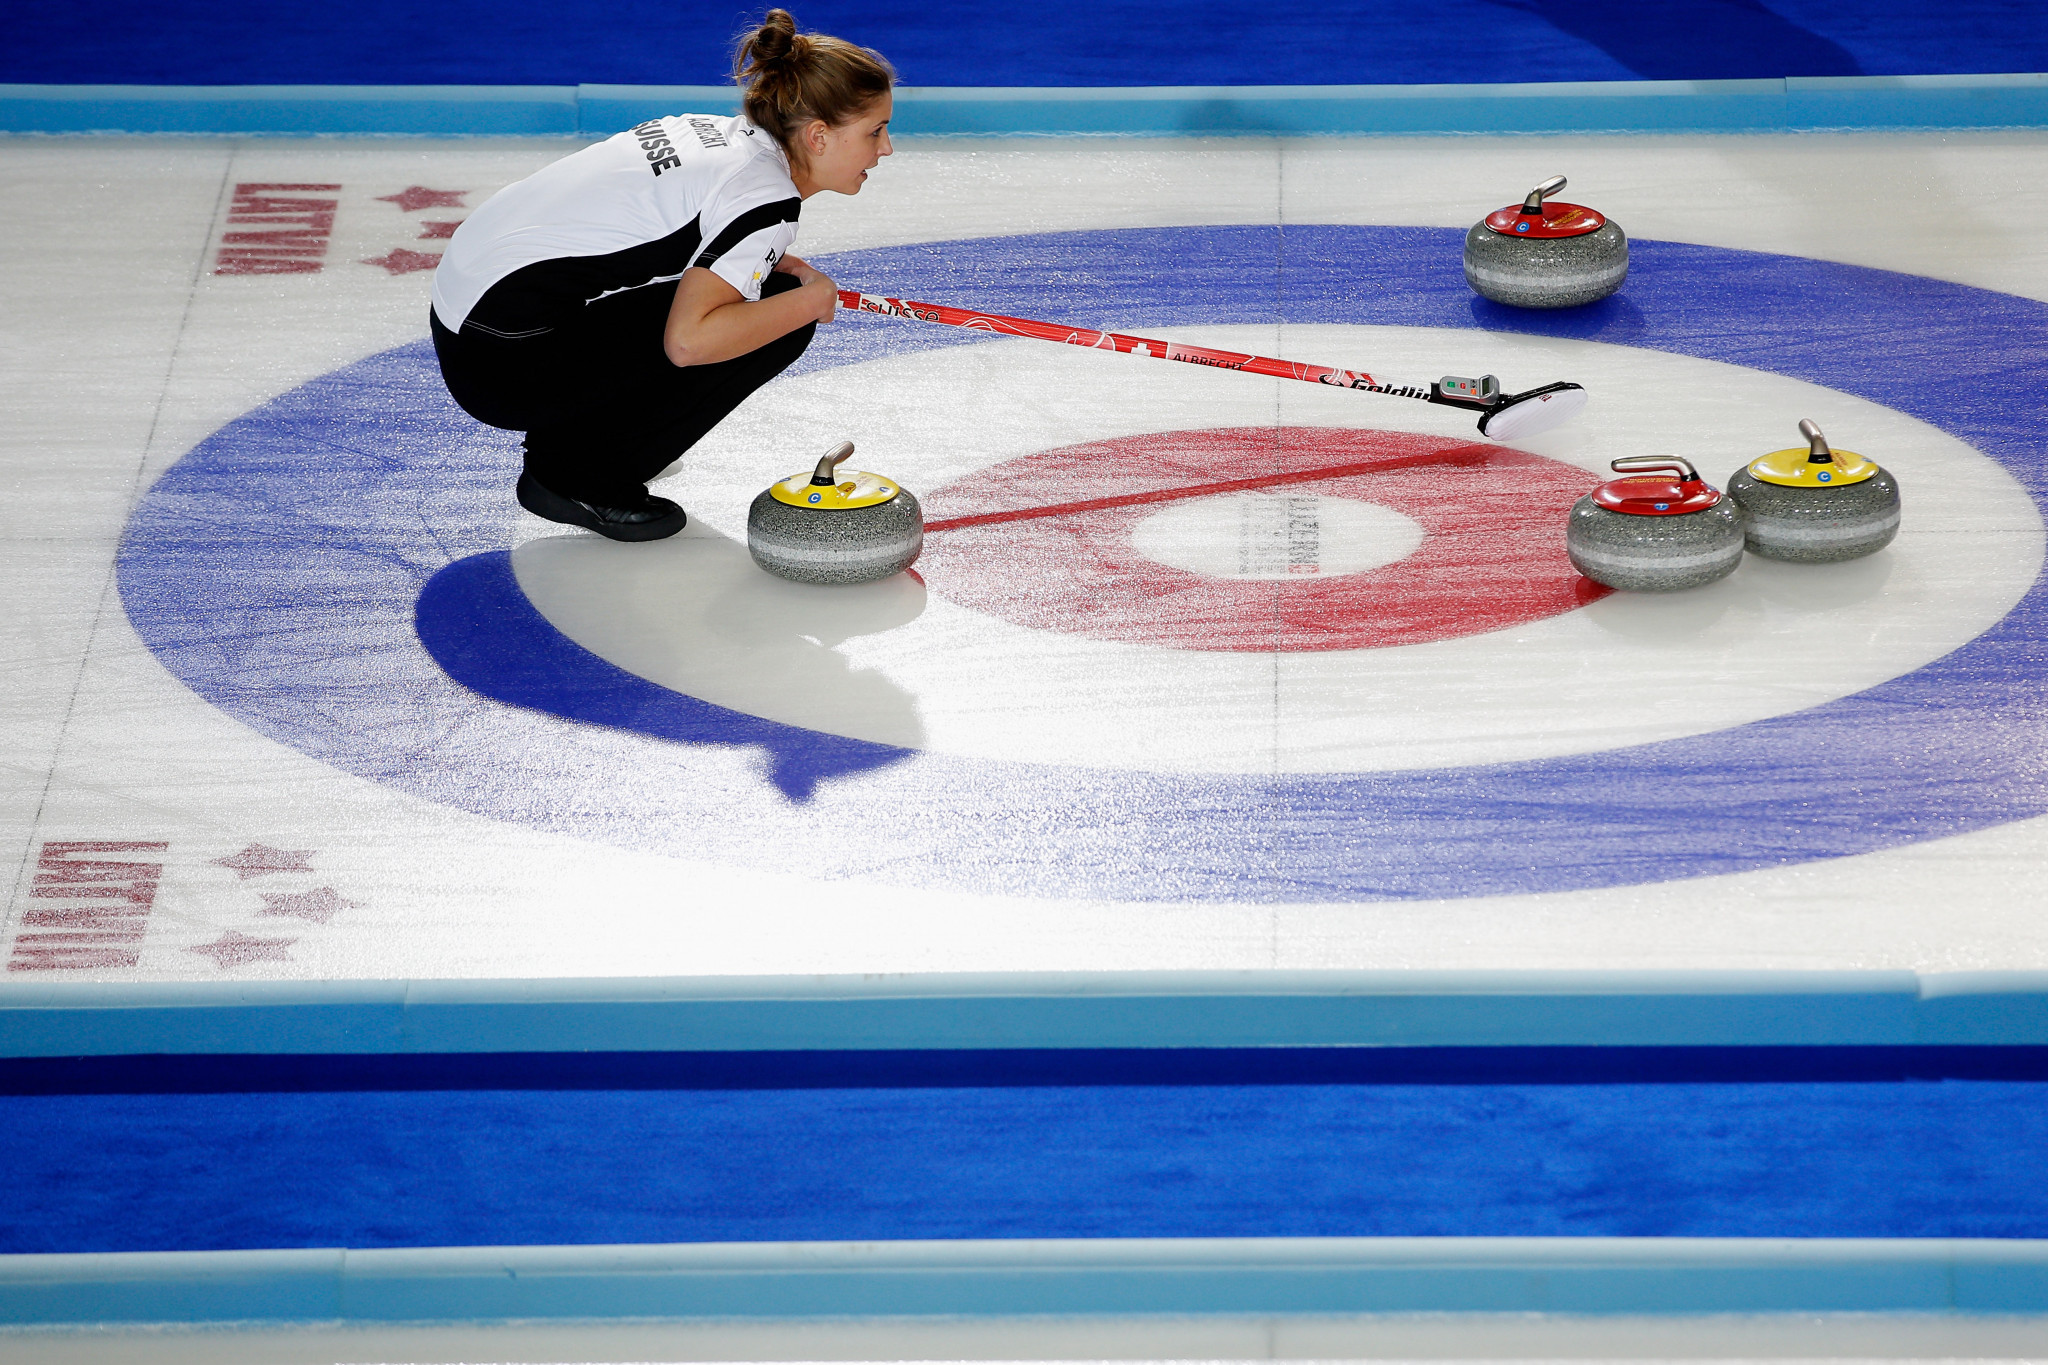 Switzerland seeking to defend World Women’s Curling Championship title